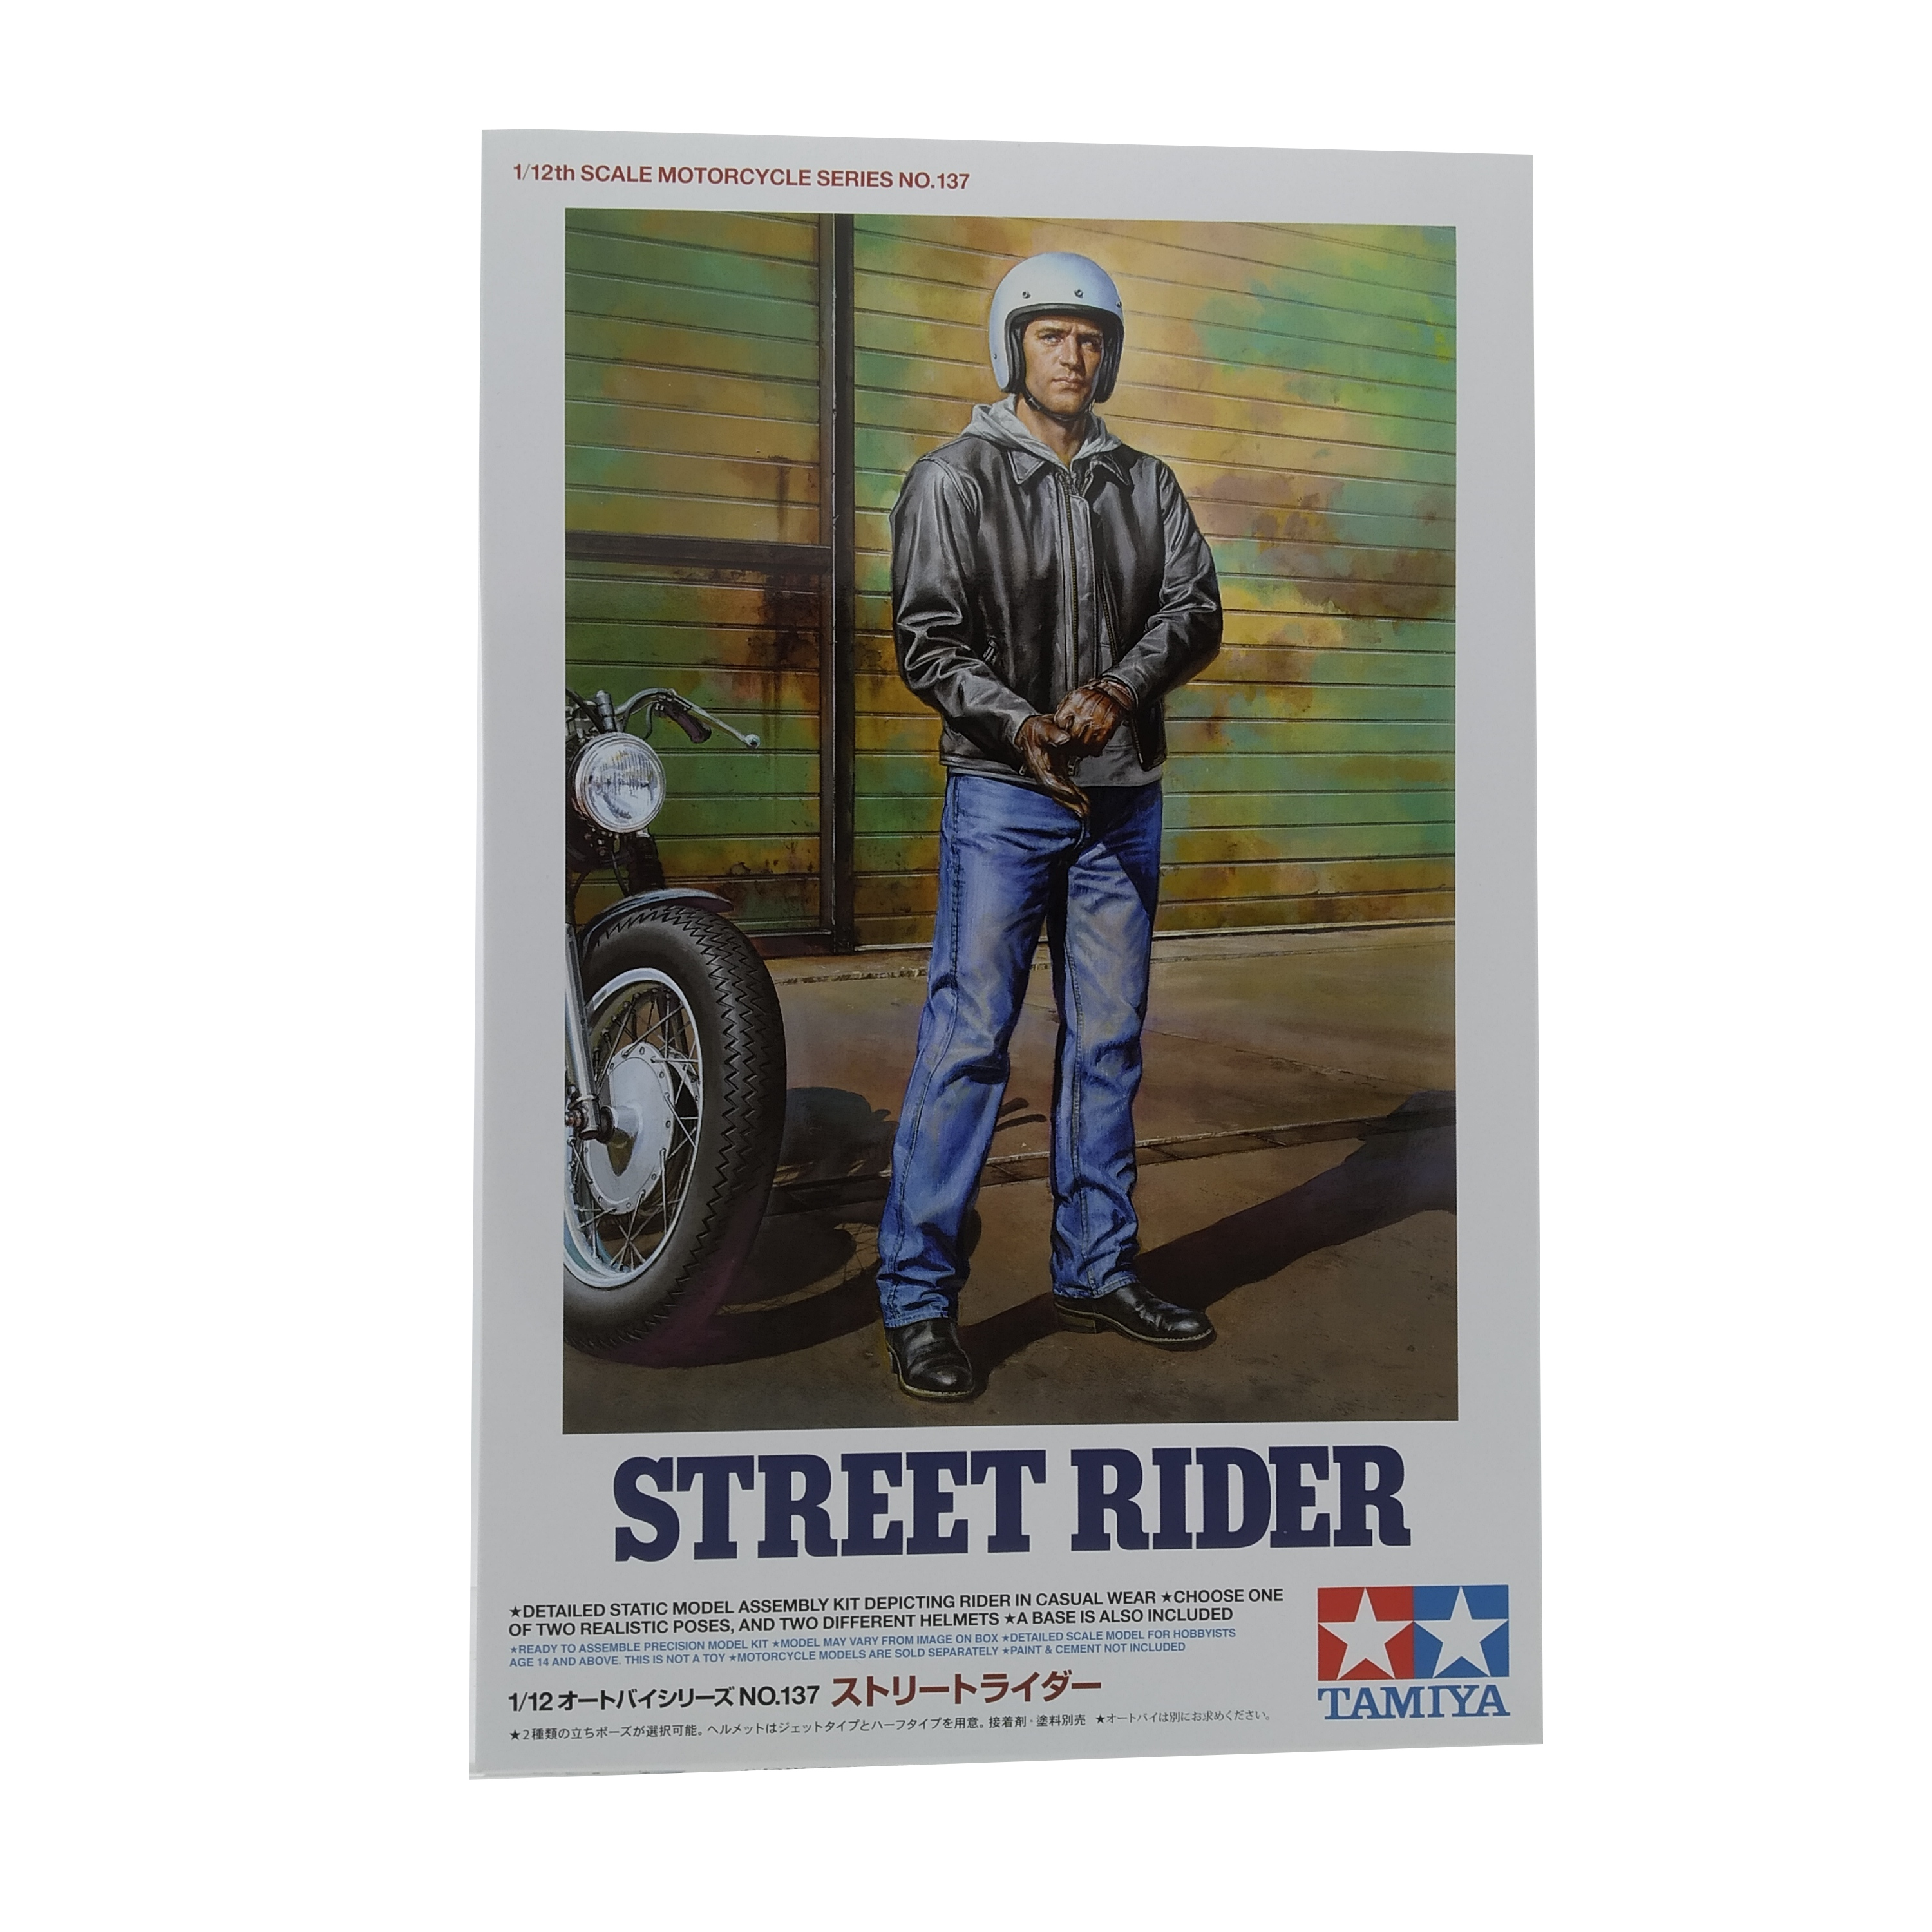   Street Rider   1:12 Tamiya 14137 # 1 hobbyplus.ru